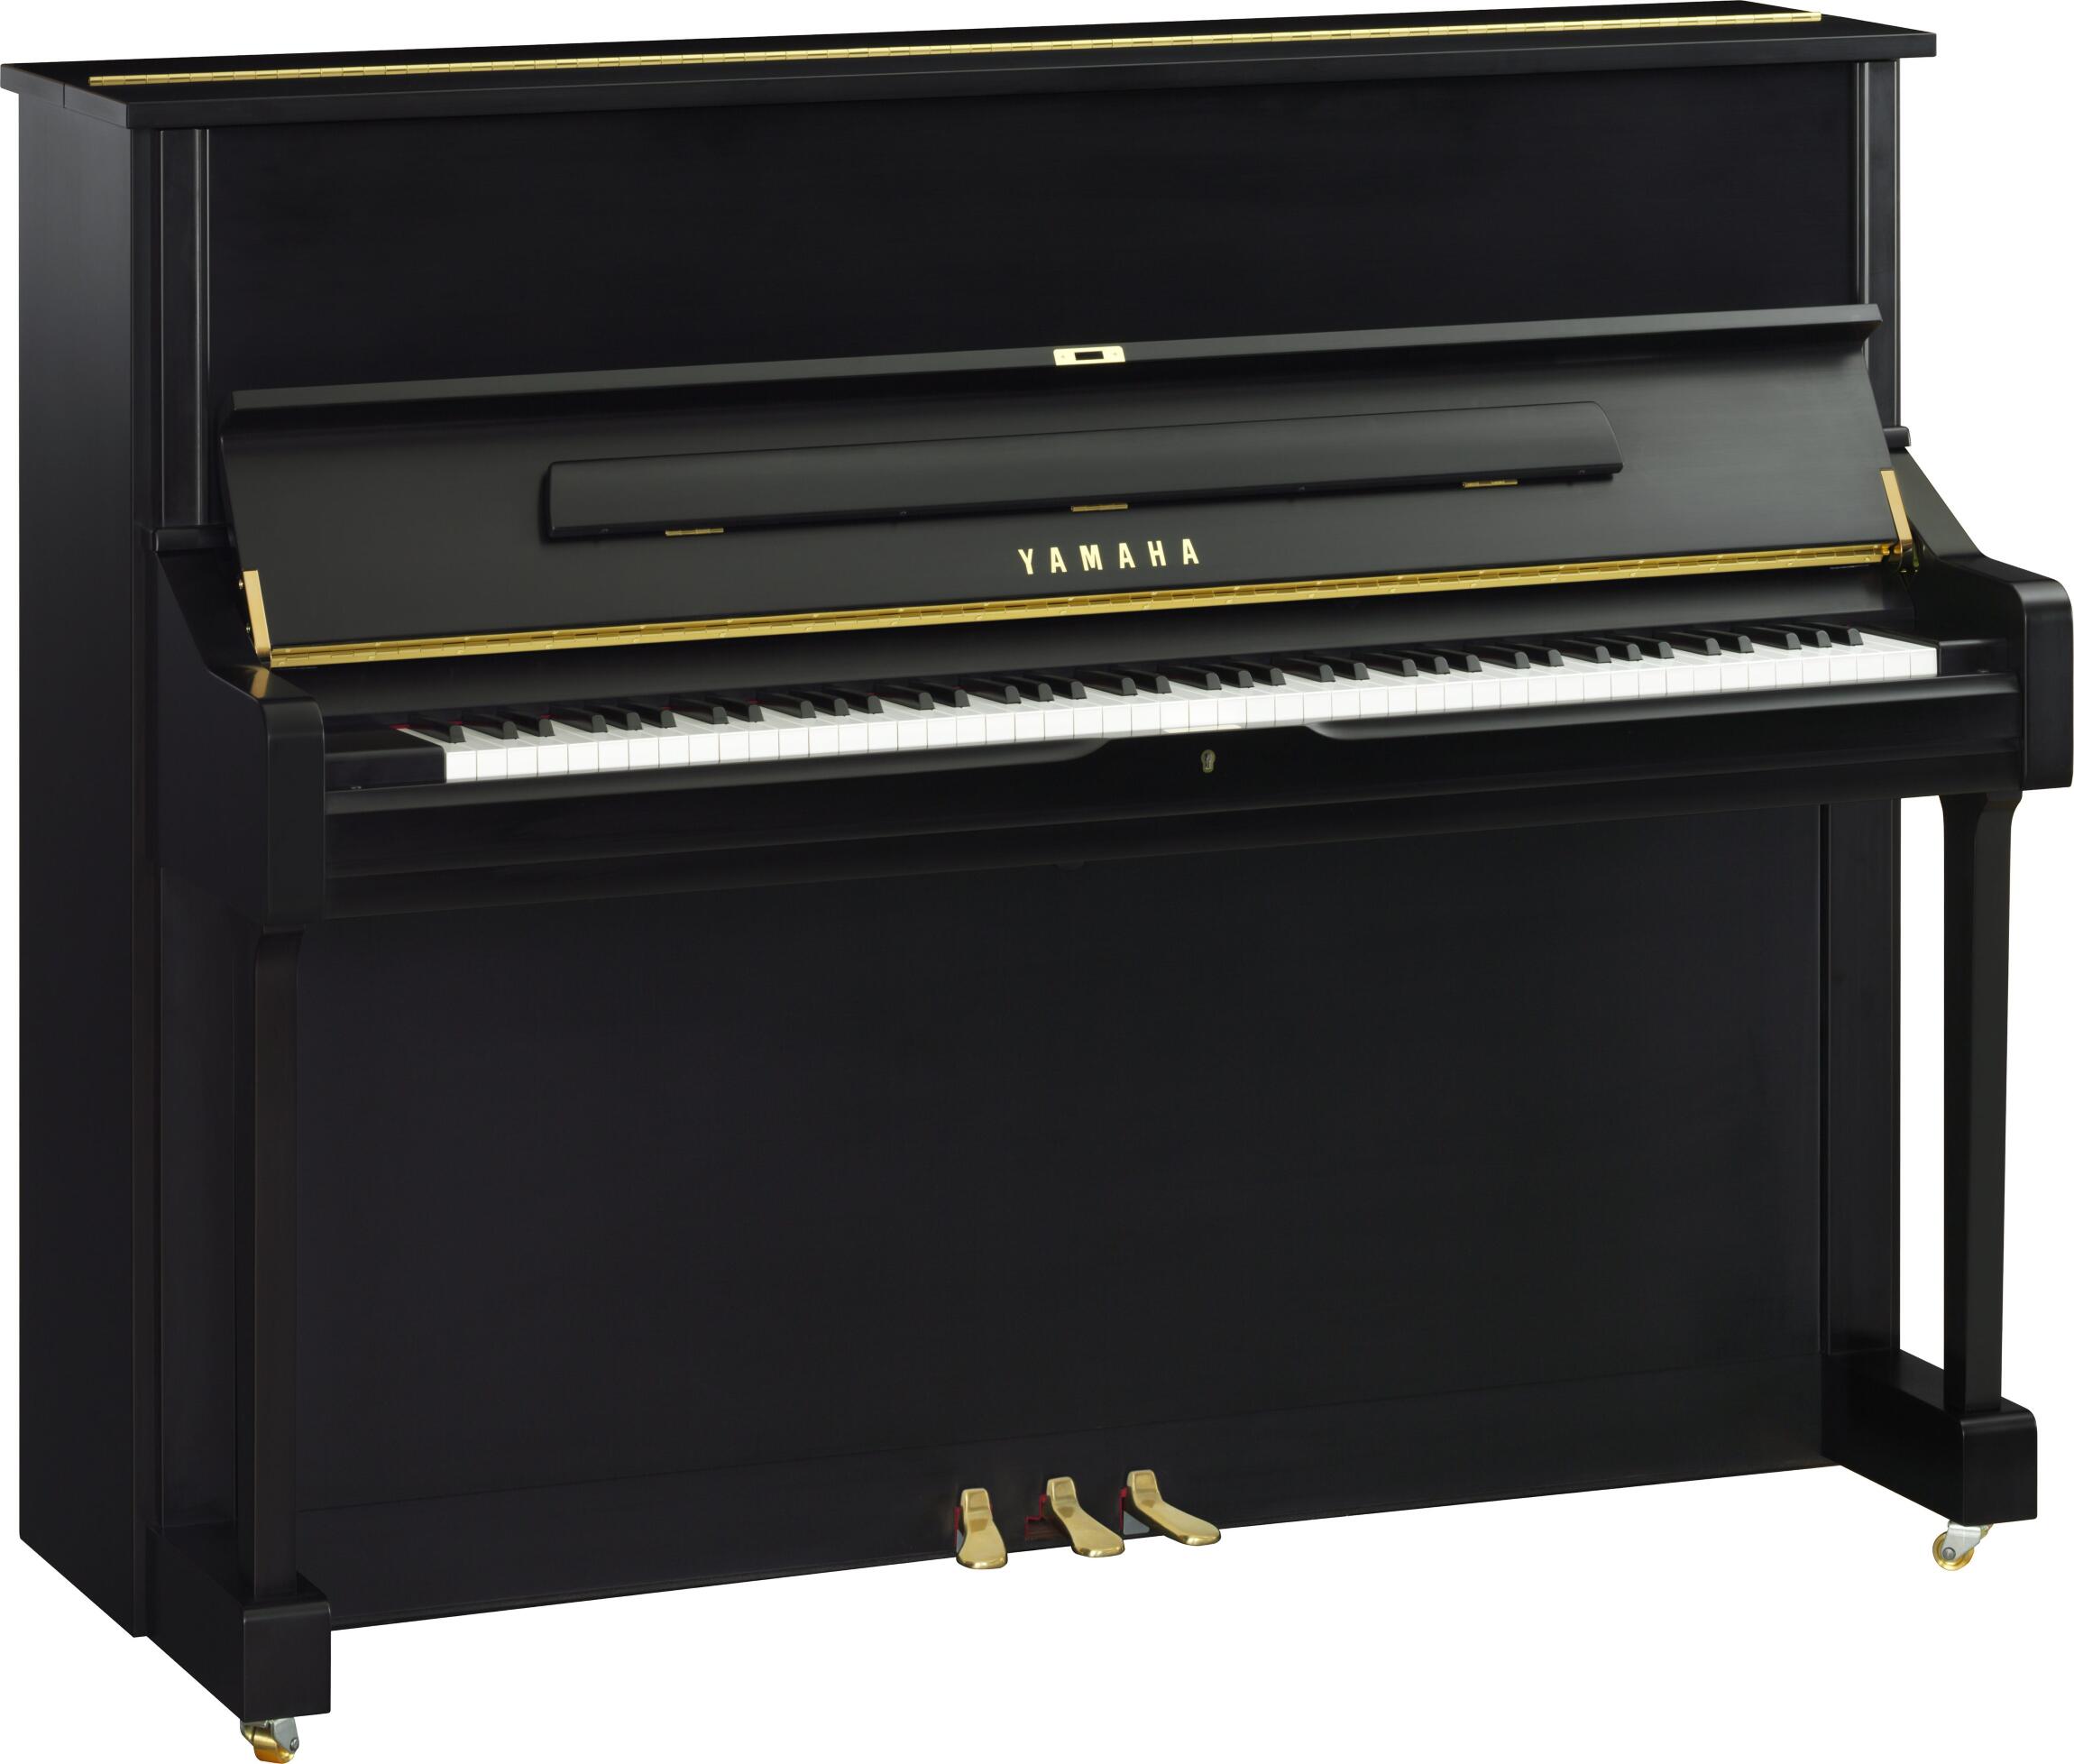 Yamaha Disklavier DU1 ENSPIRE SE Pianos, Satin Black, 121cm : photo 1